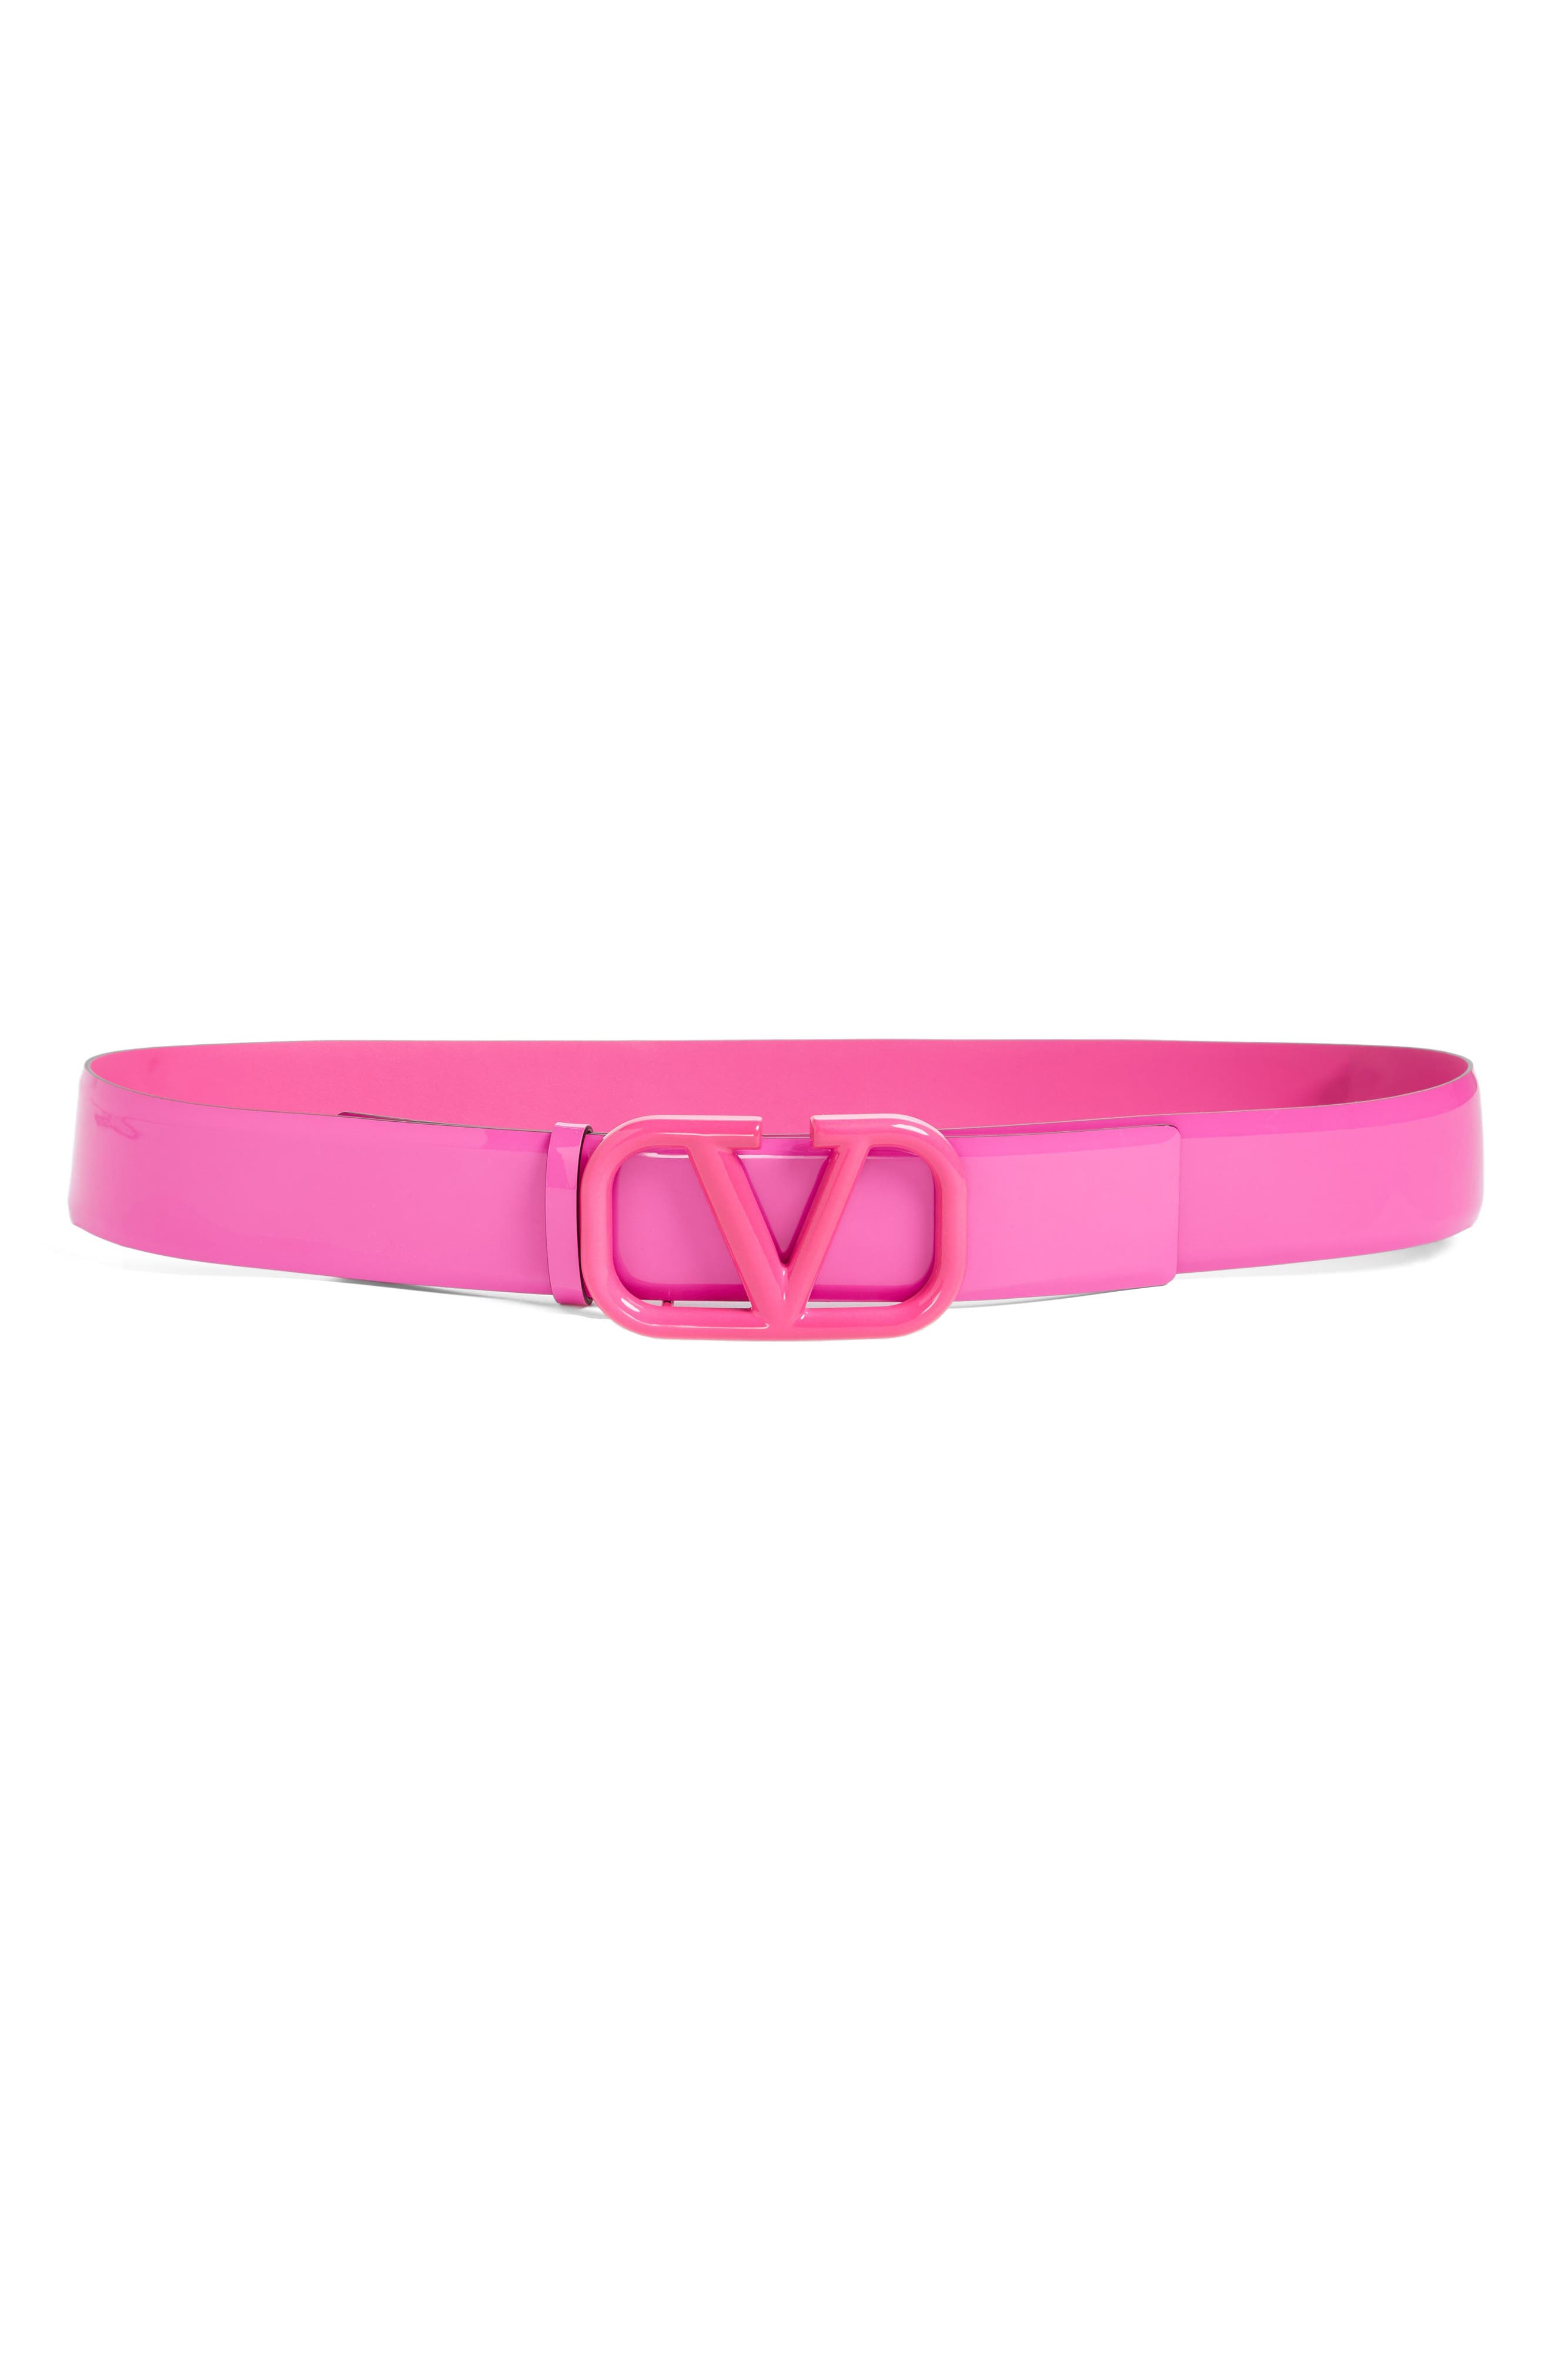 Pink Single NoName belt WOMEN FASHION Accessories Belt Pink discount 65% 